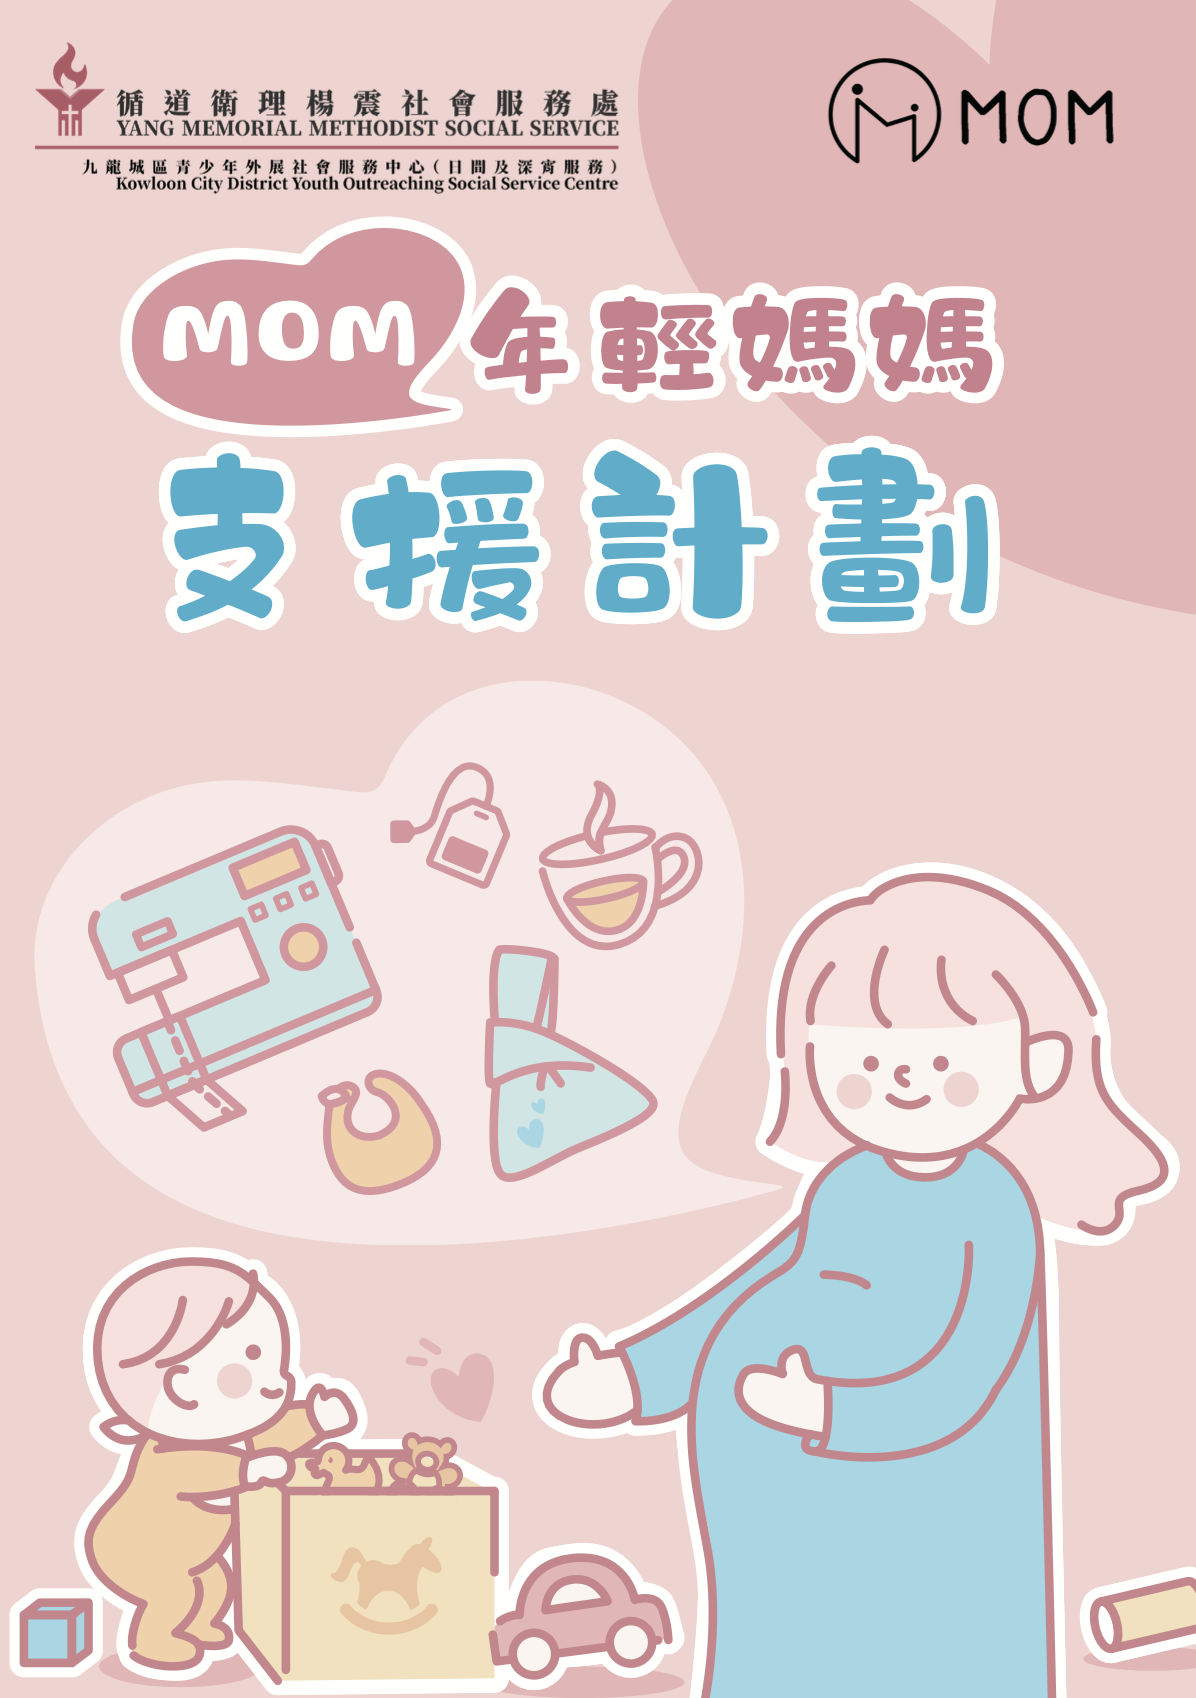 MOM 年輕媽媽支援計劃